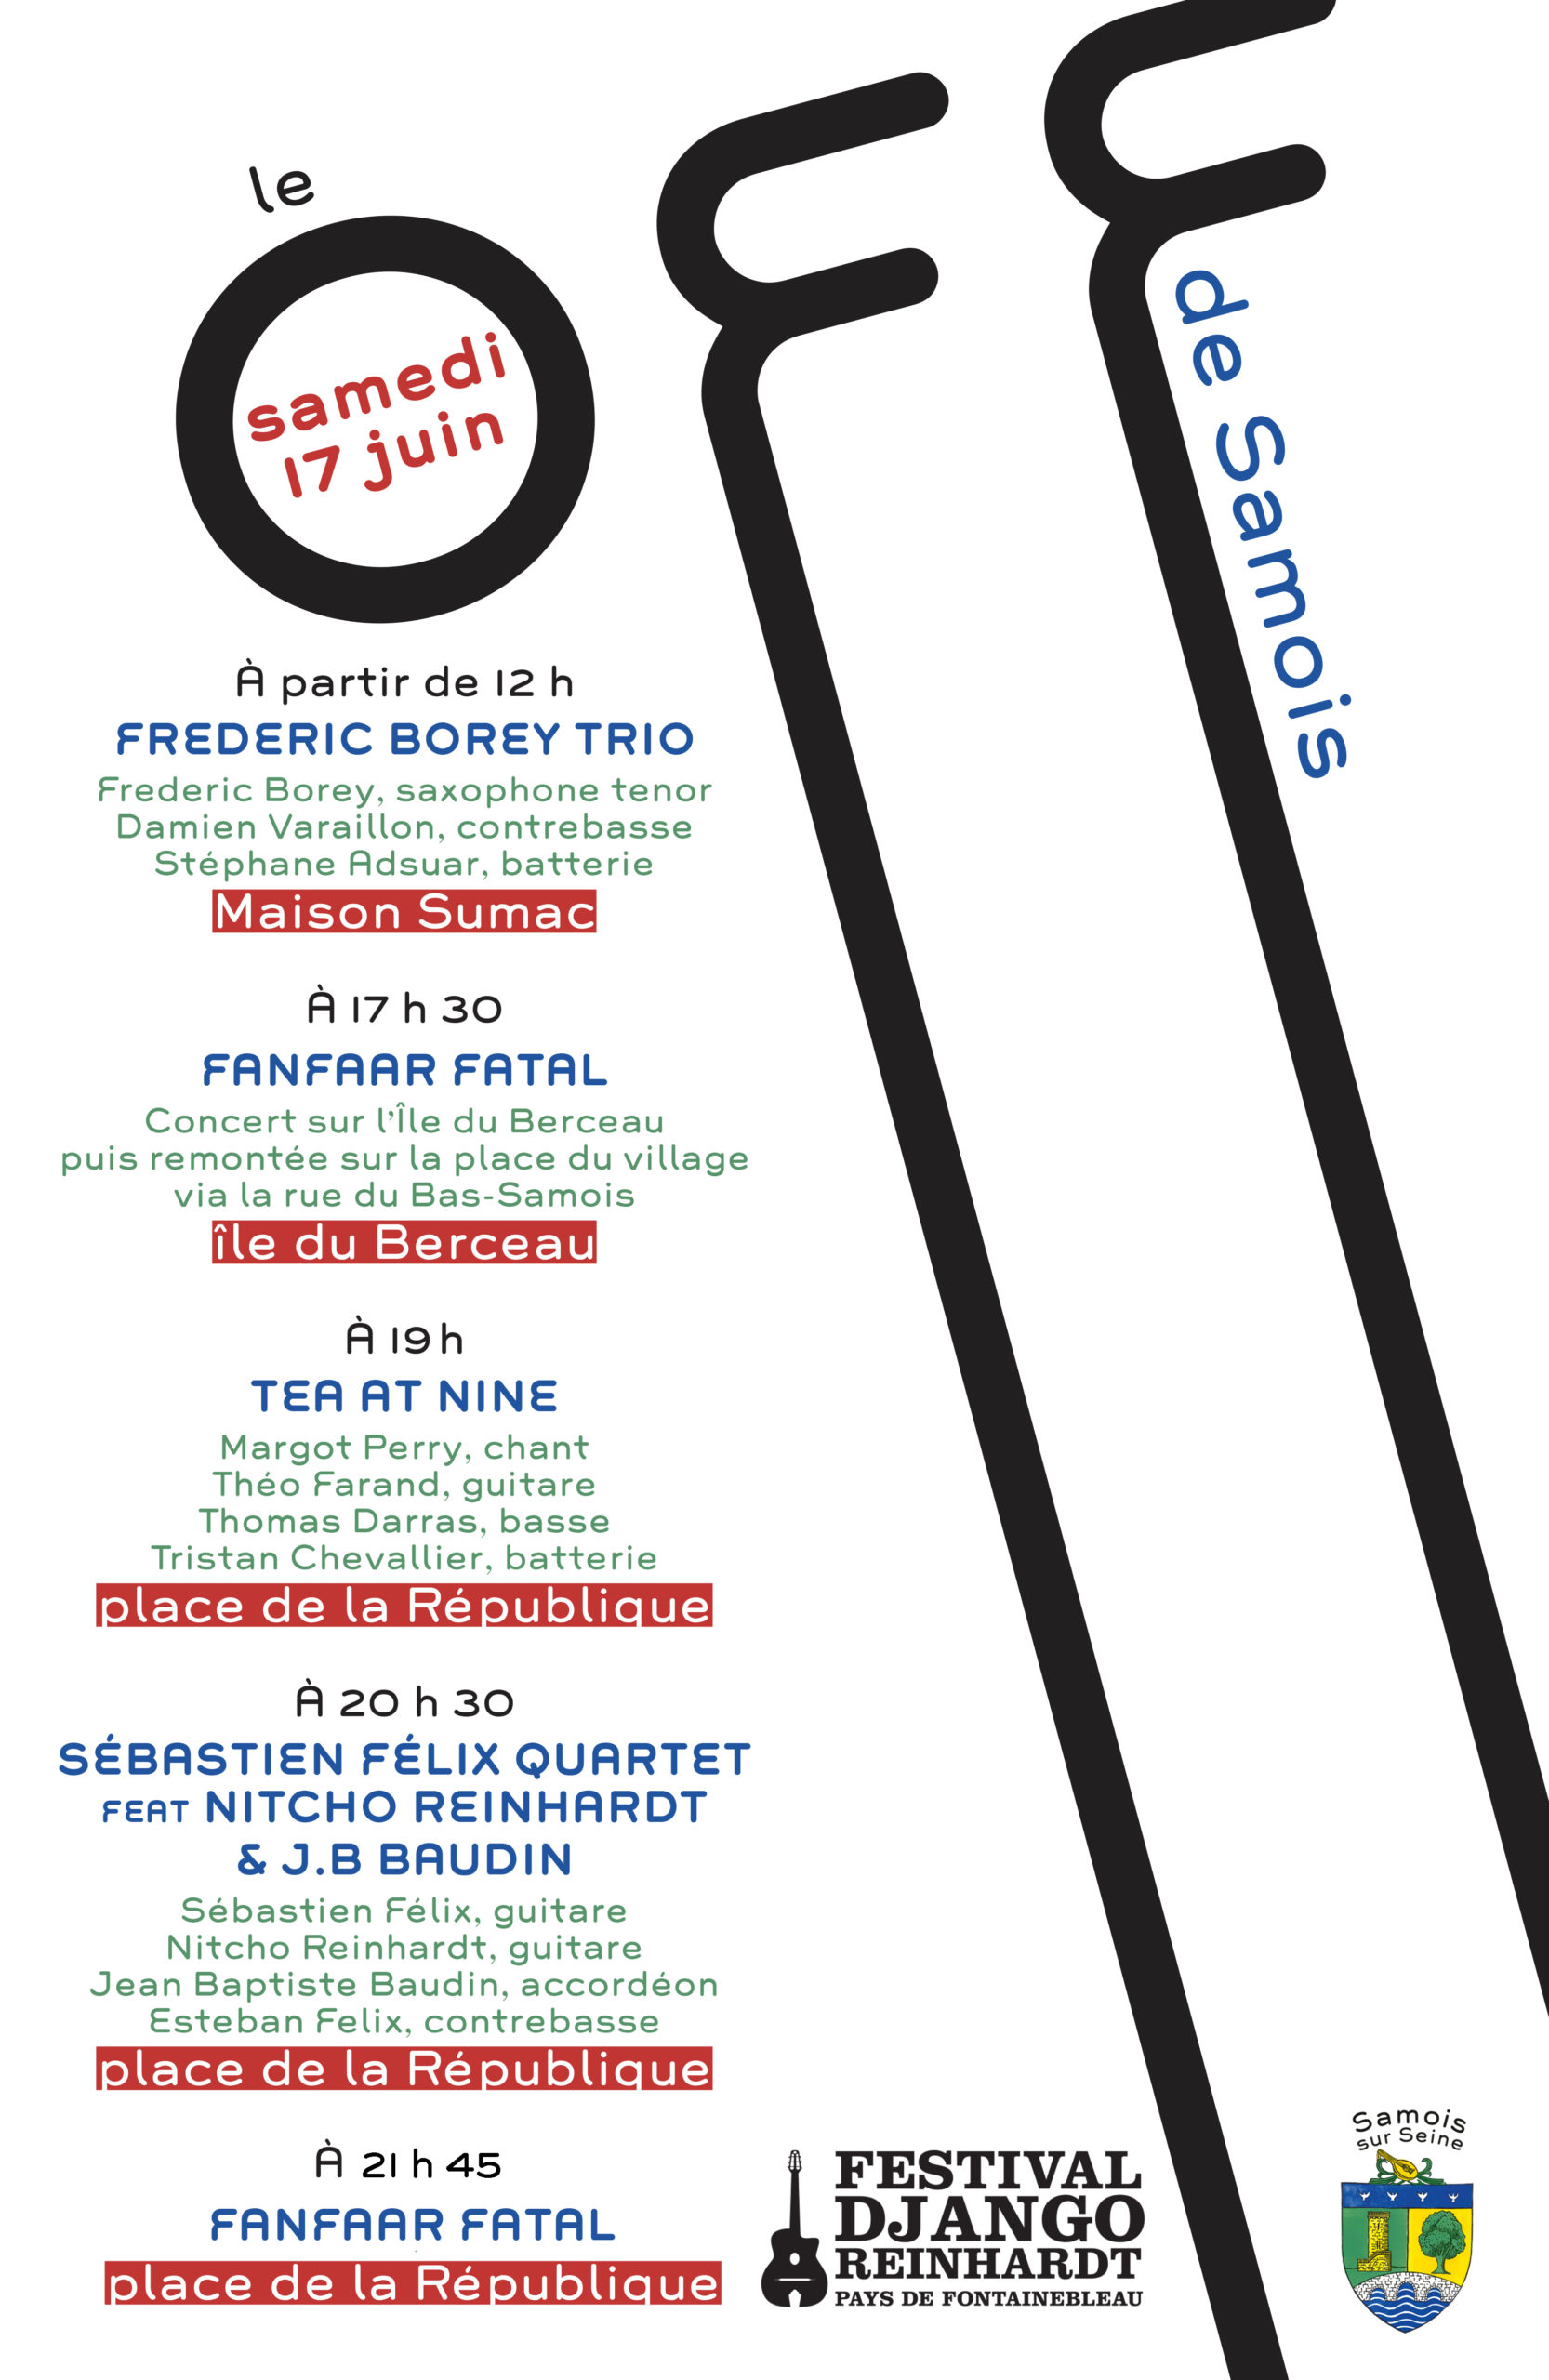 Festival Django Reinhardt Off 17 Juin 2023 - Samois-sur-Seine